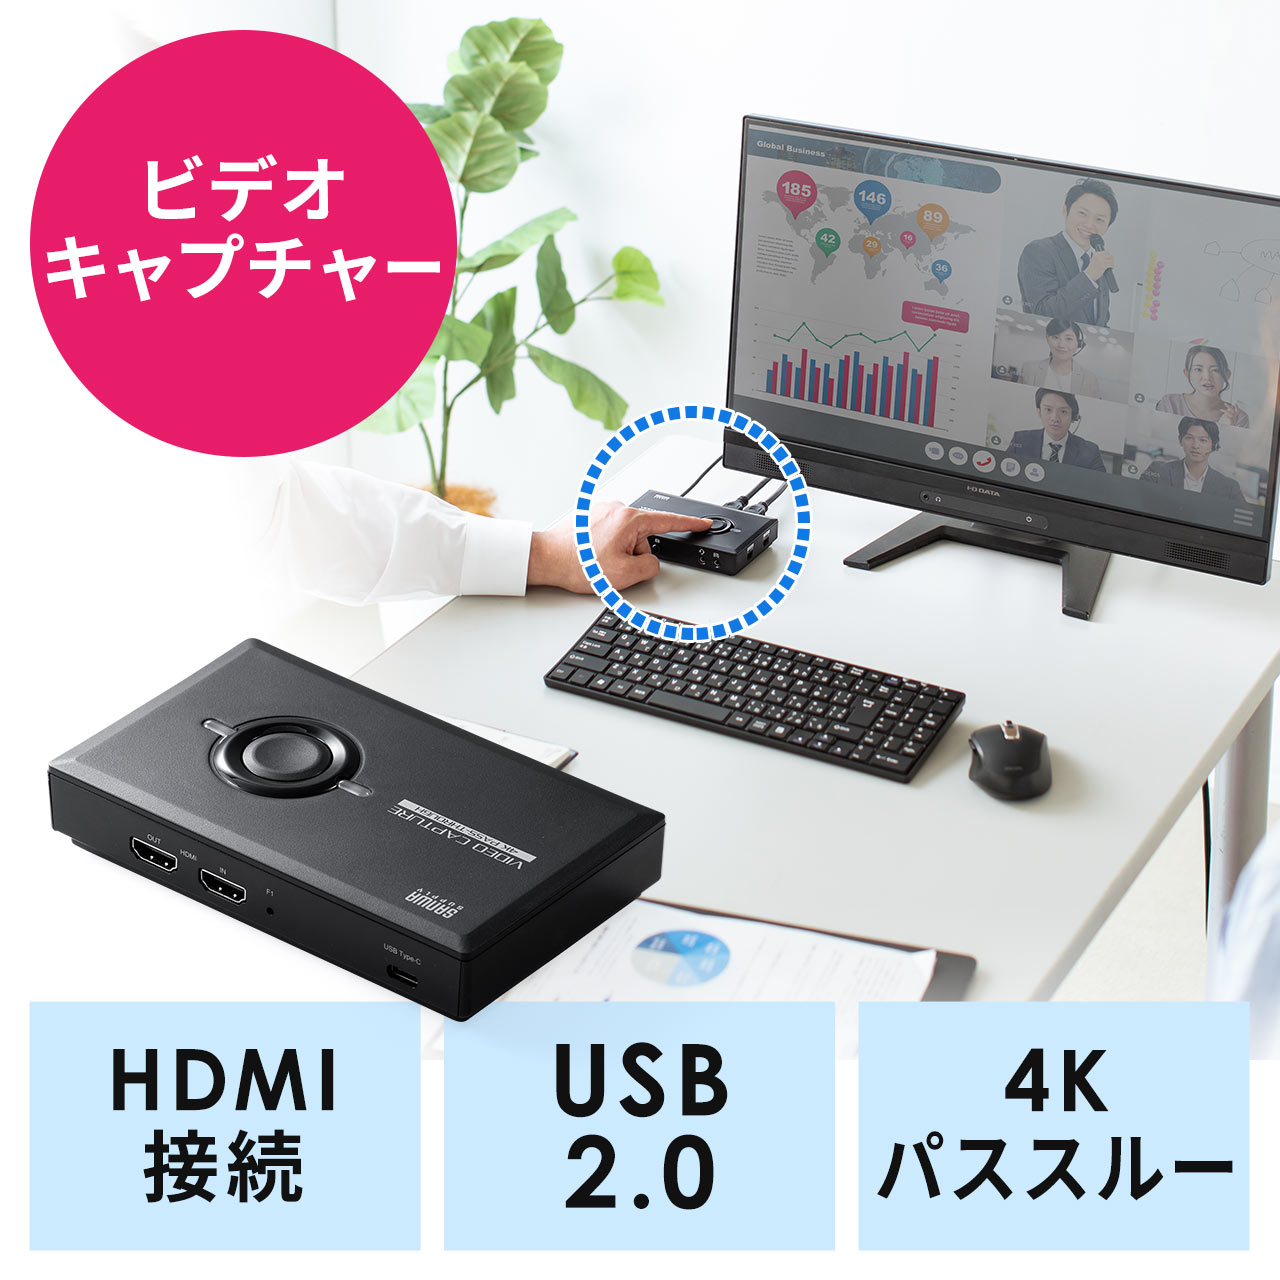 4K HDMI ビデオキャプチャーボード